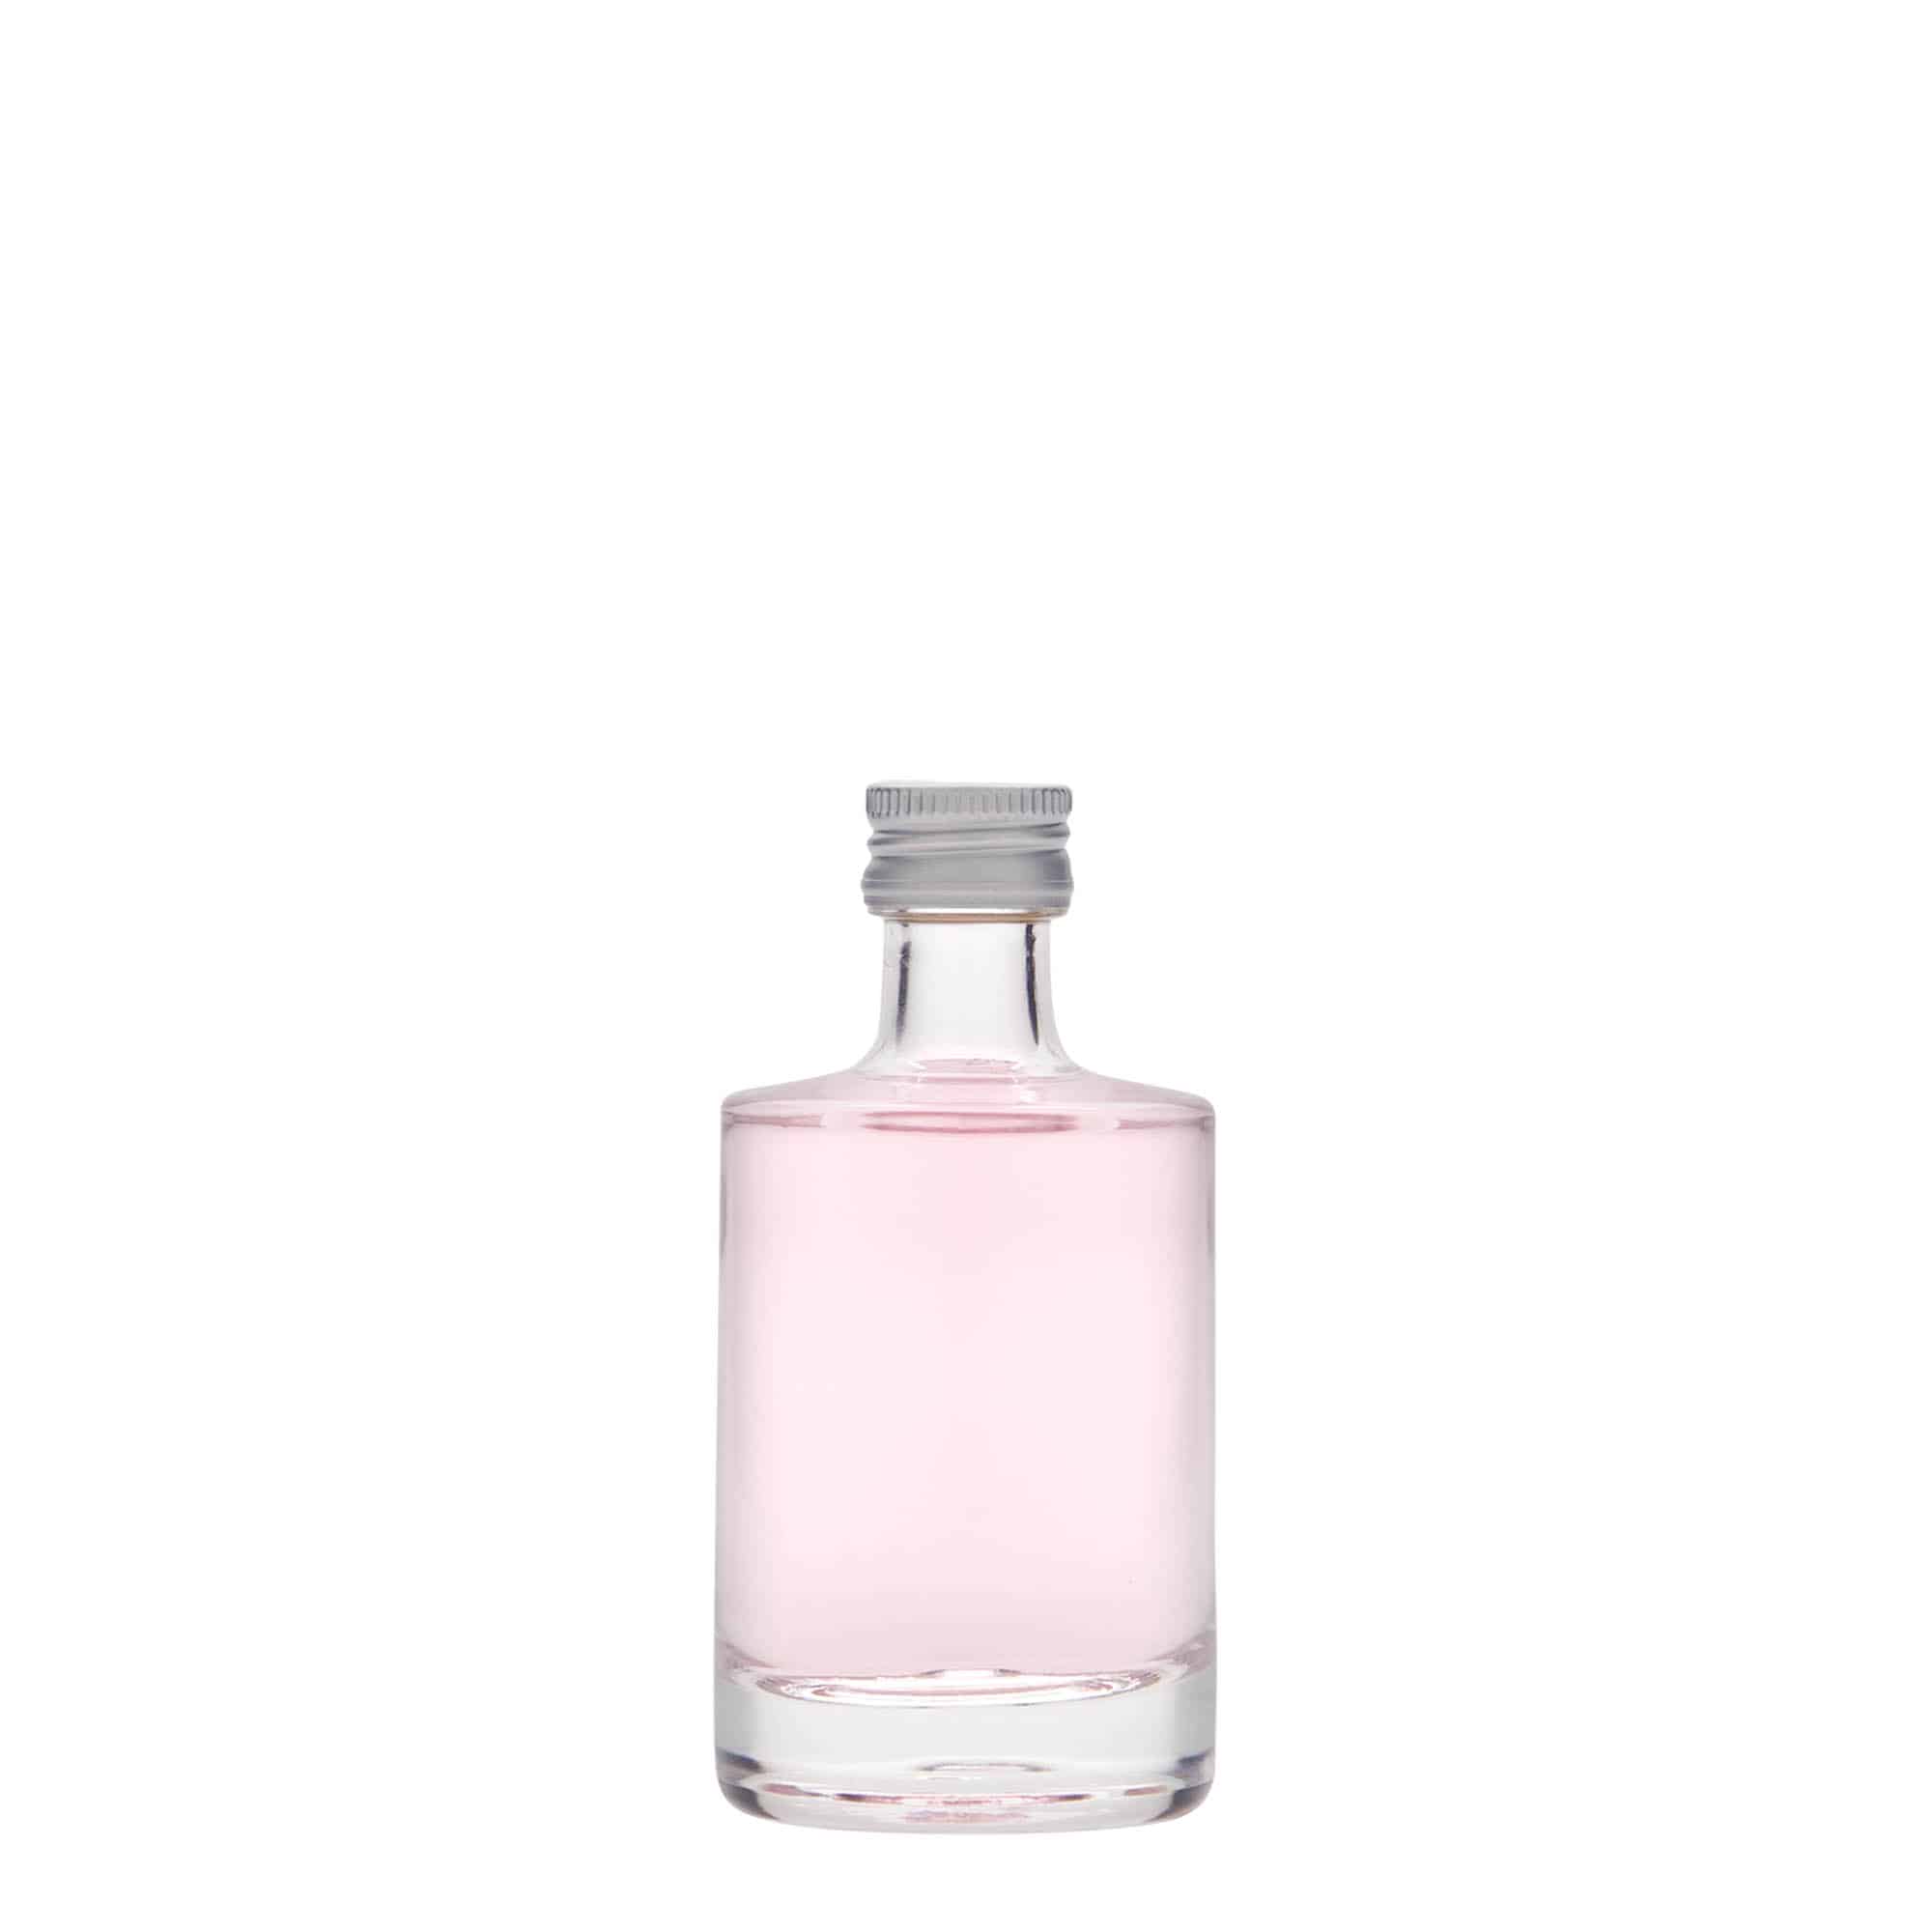 50 ml glass bottle 'Aventura', closure: PP 18